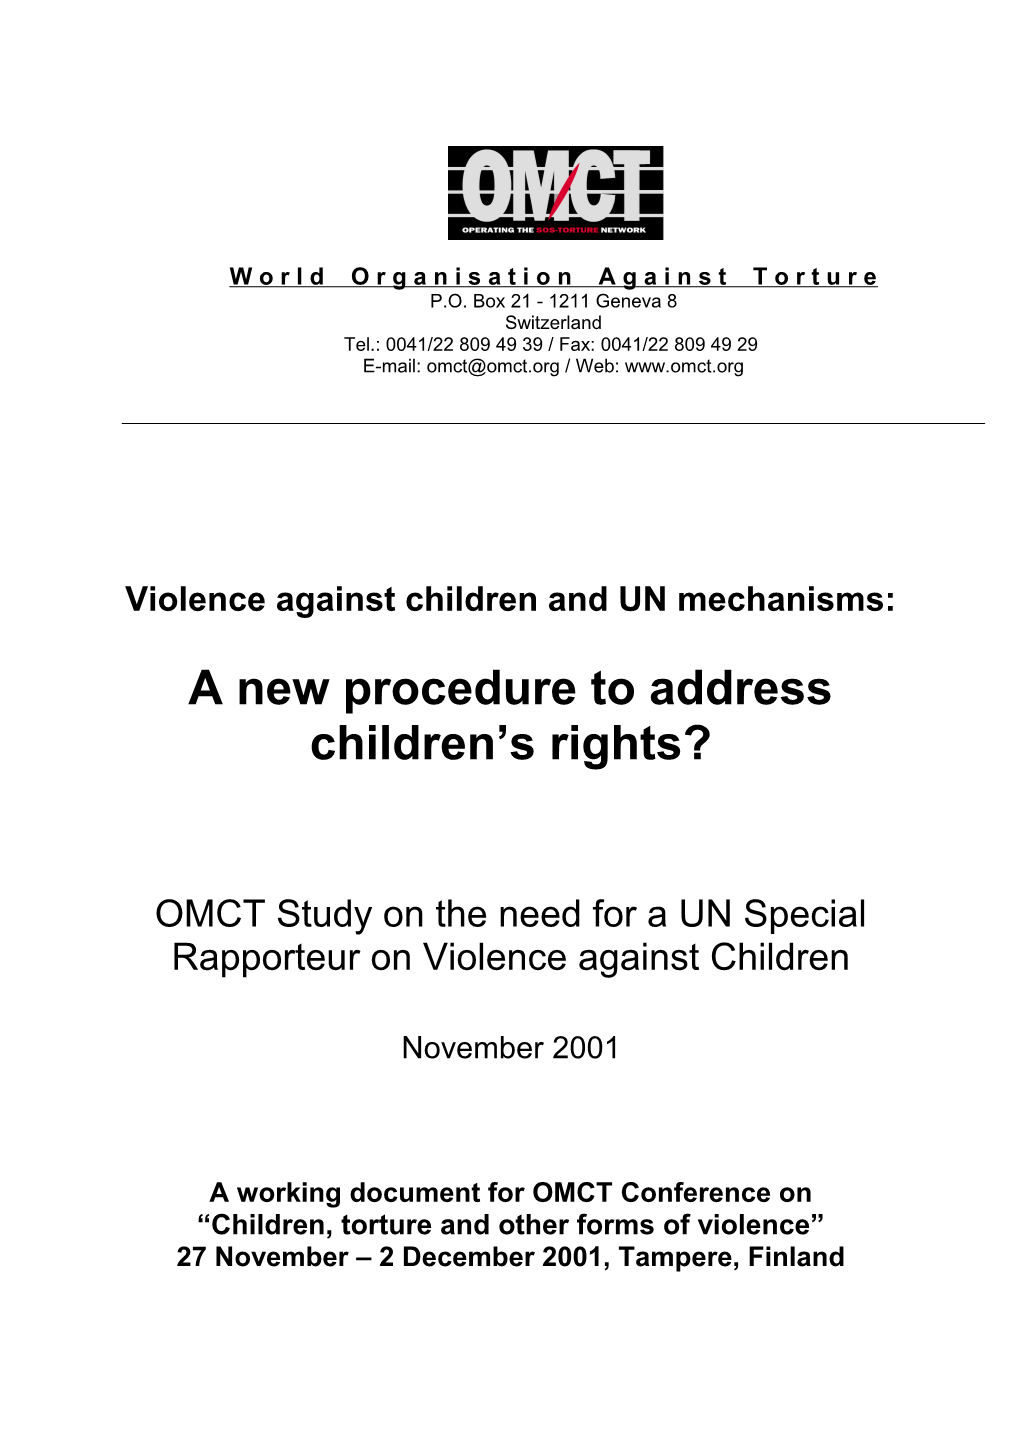 Violence Against Children and UN Mechanisms: New Procedures to Address Children S Rights